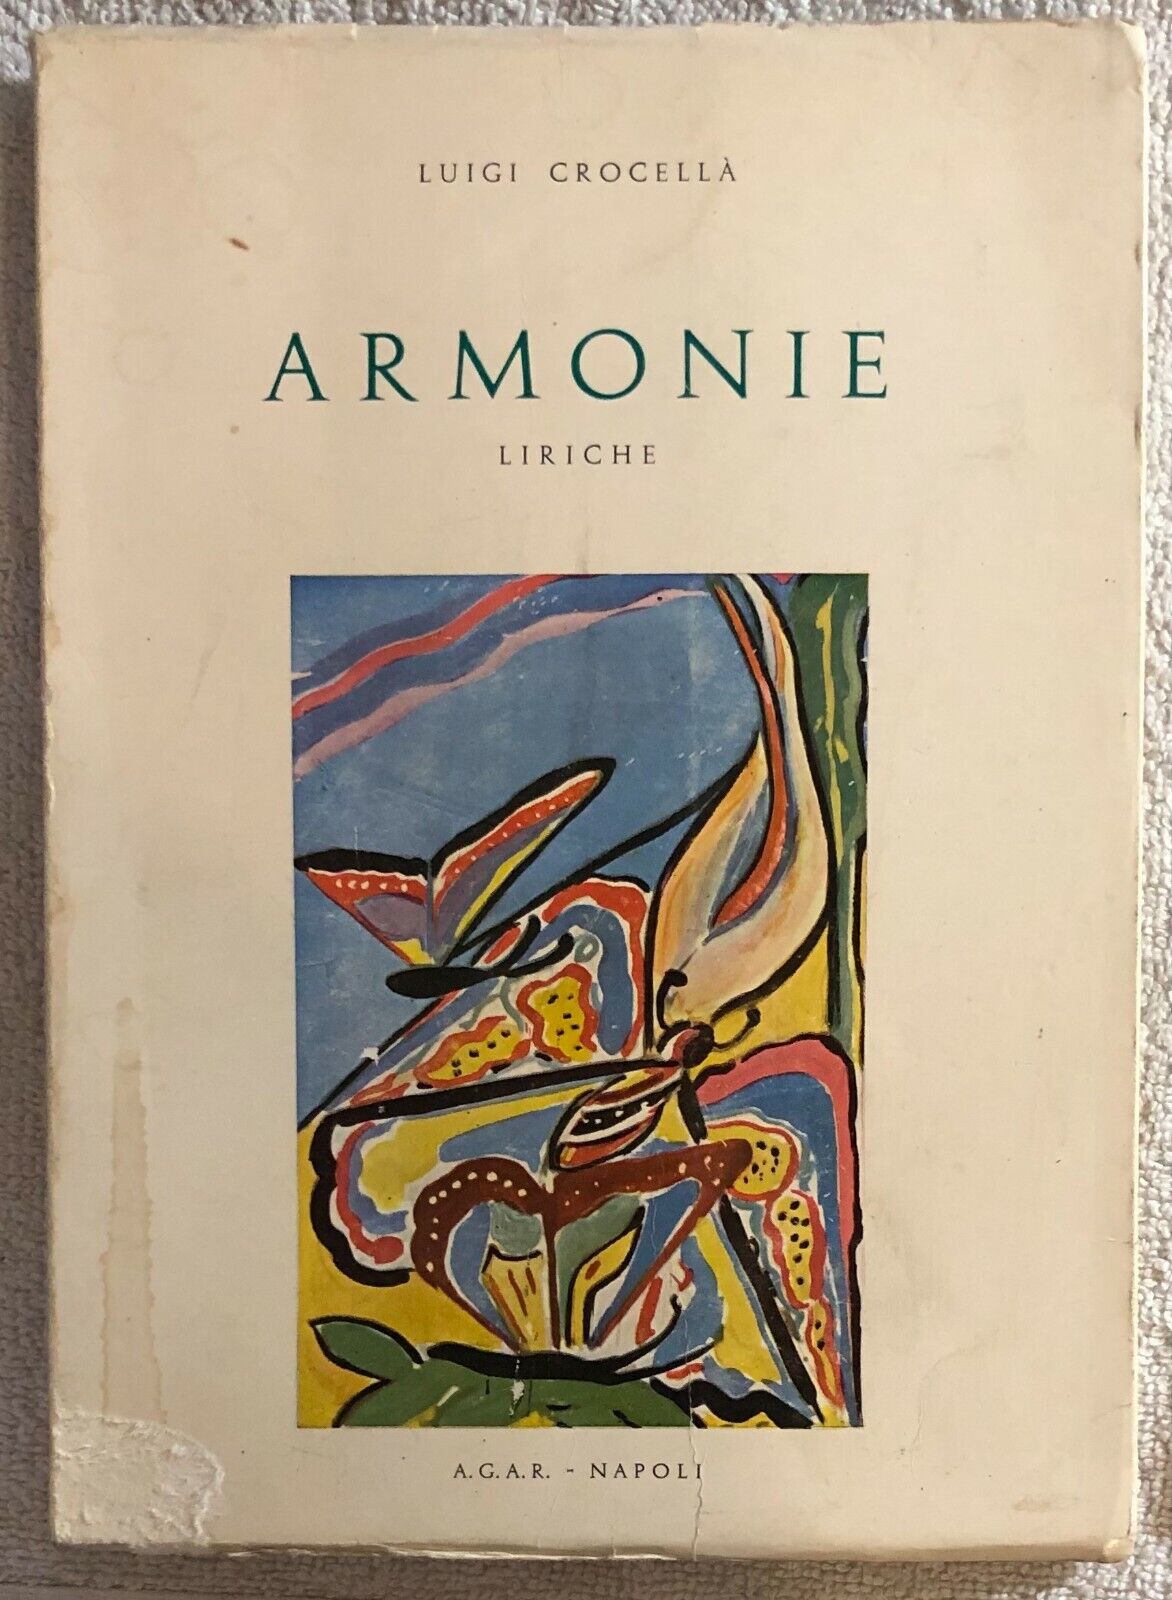 Armonie di Luigi Crocell?,  1965,  Agar Napoli